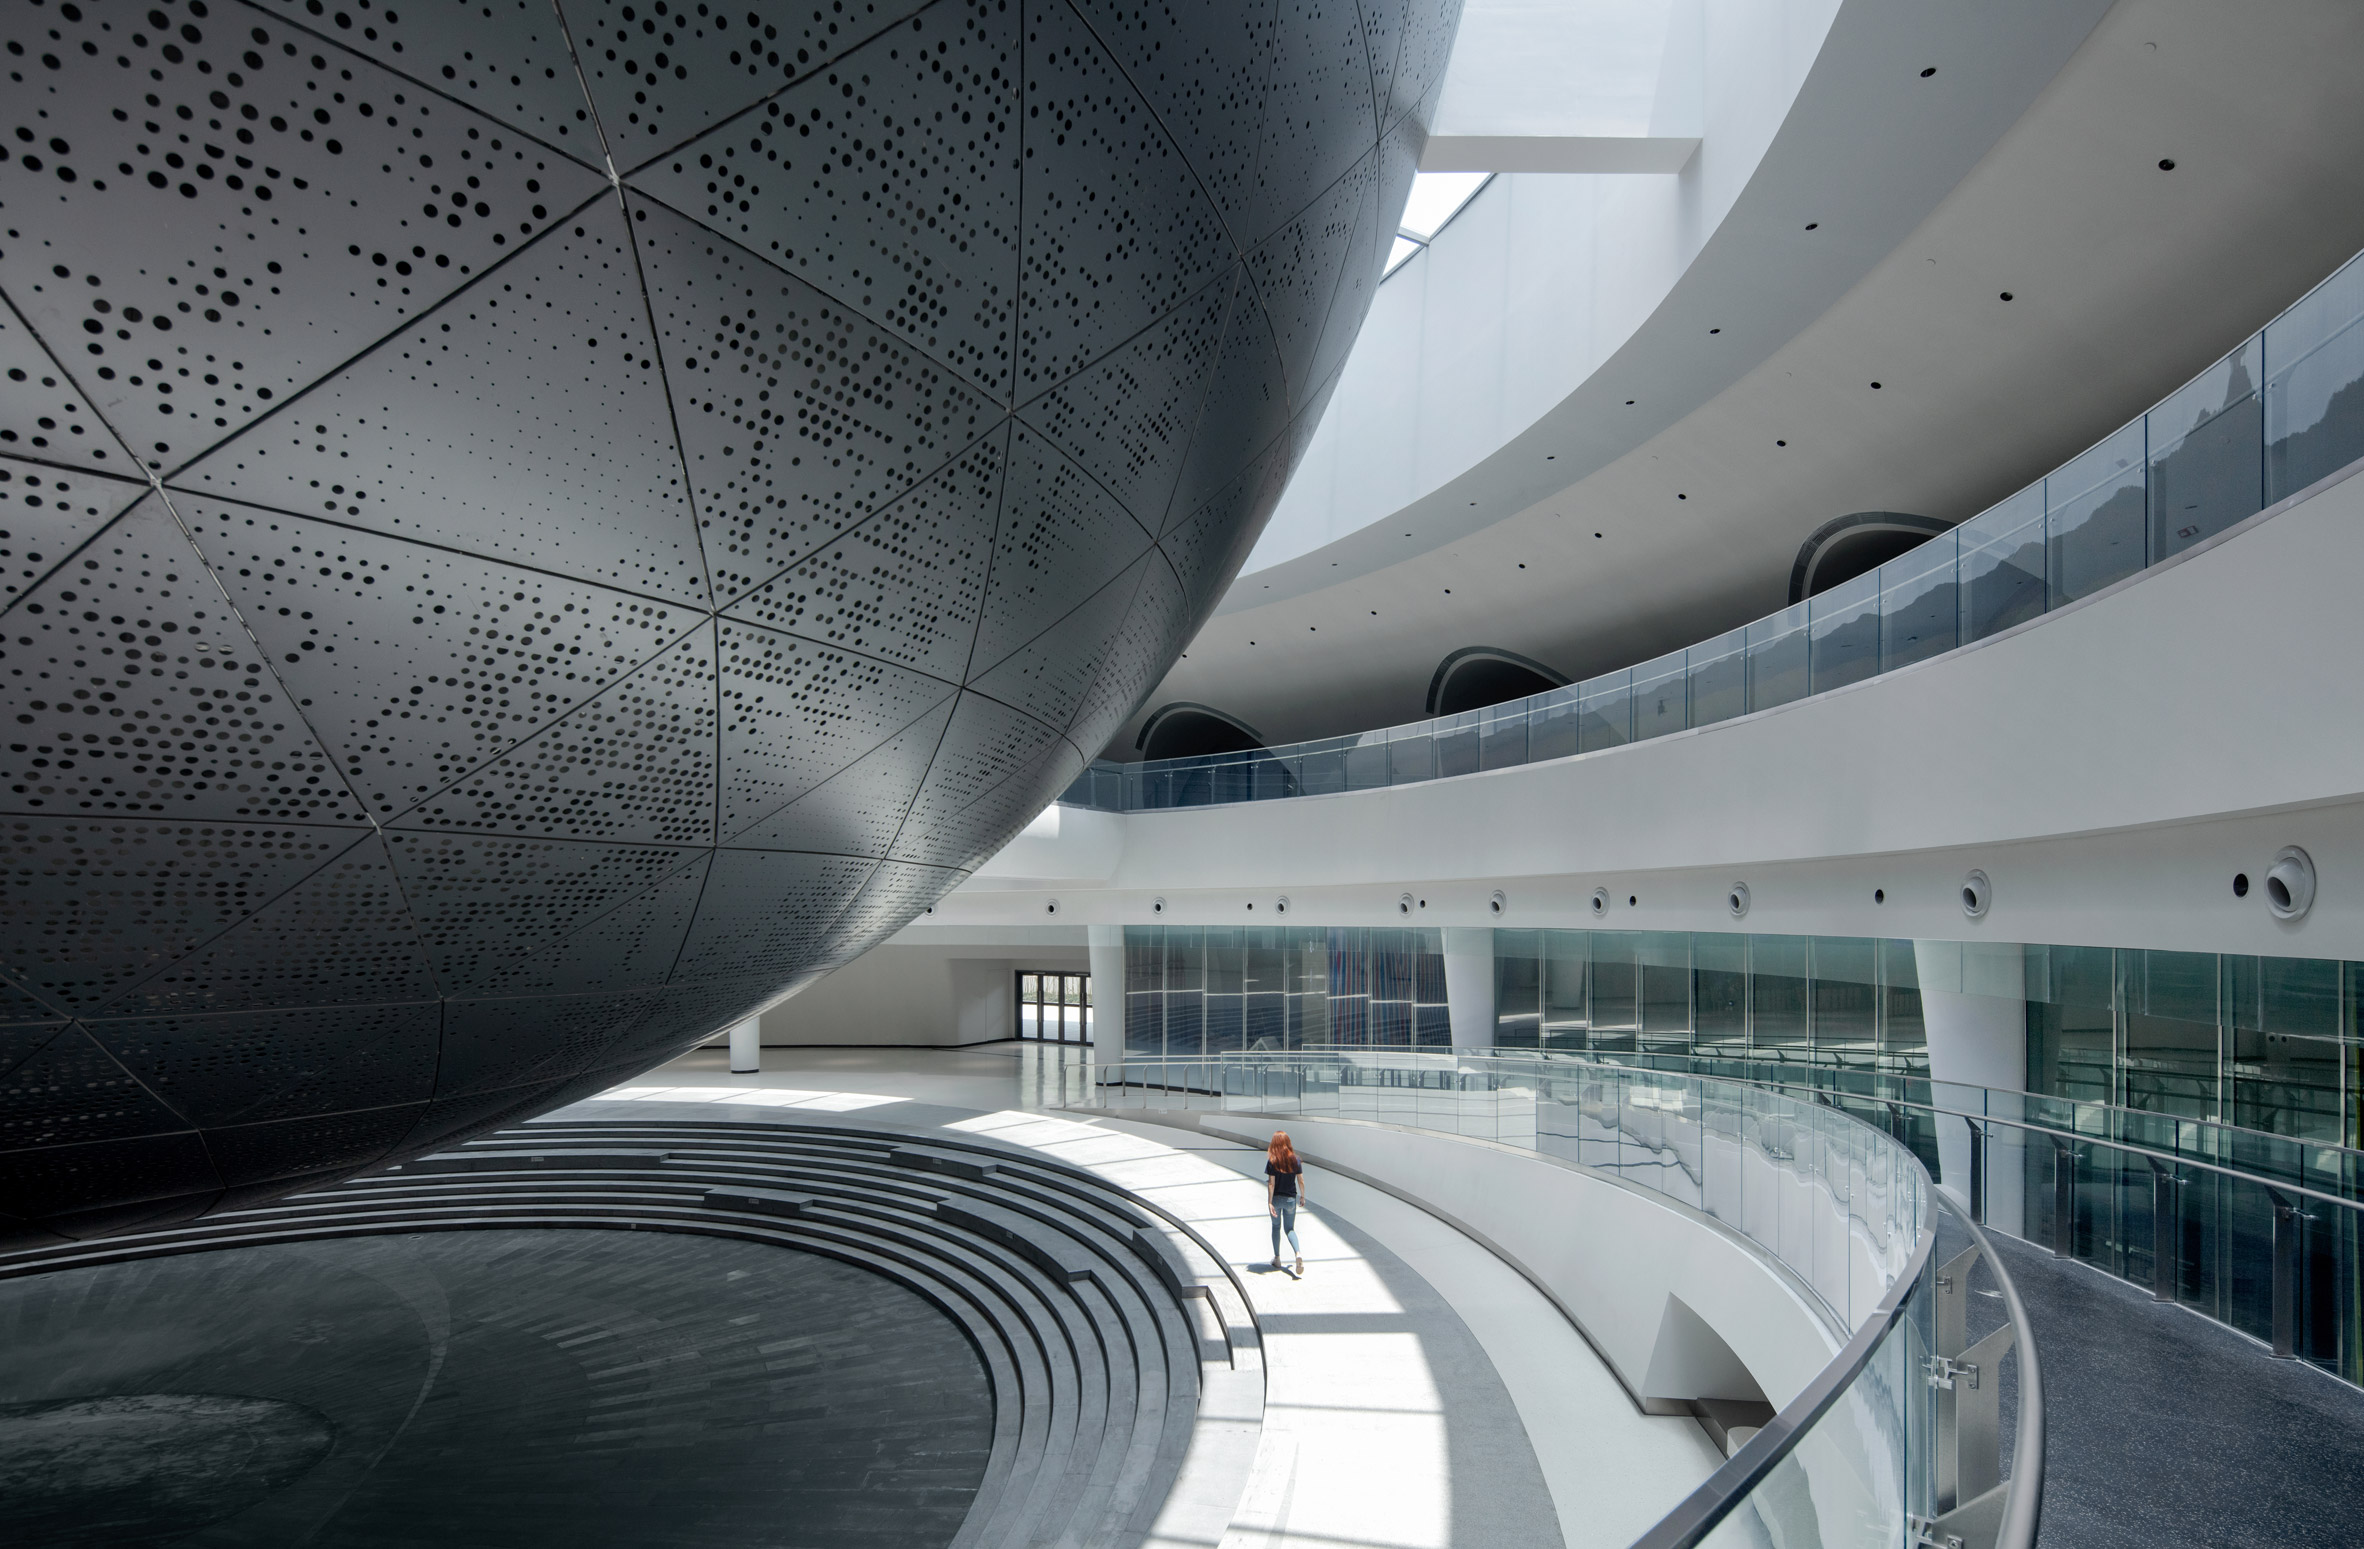 Sphere-shaped planetarium in Shanghai